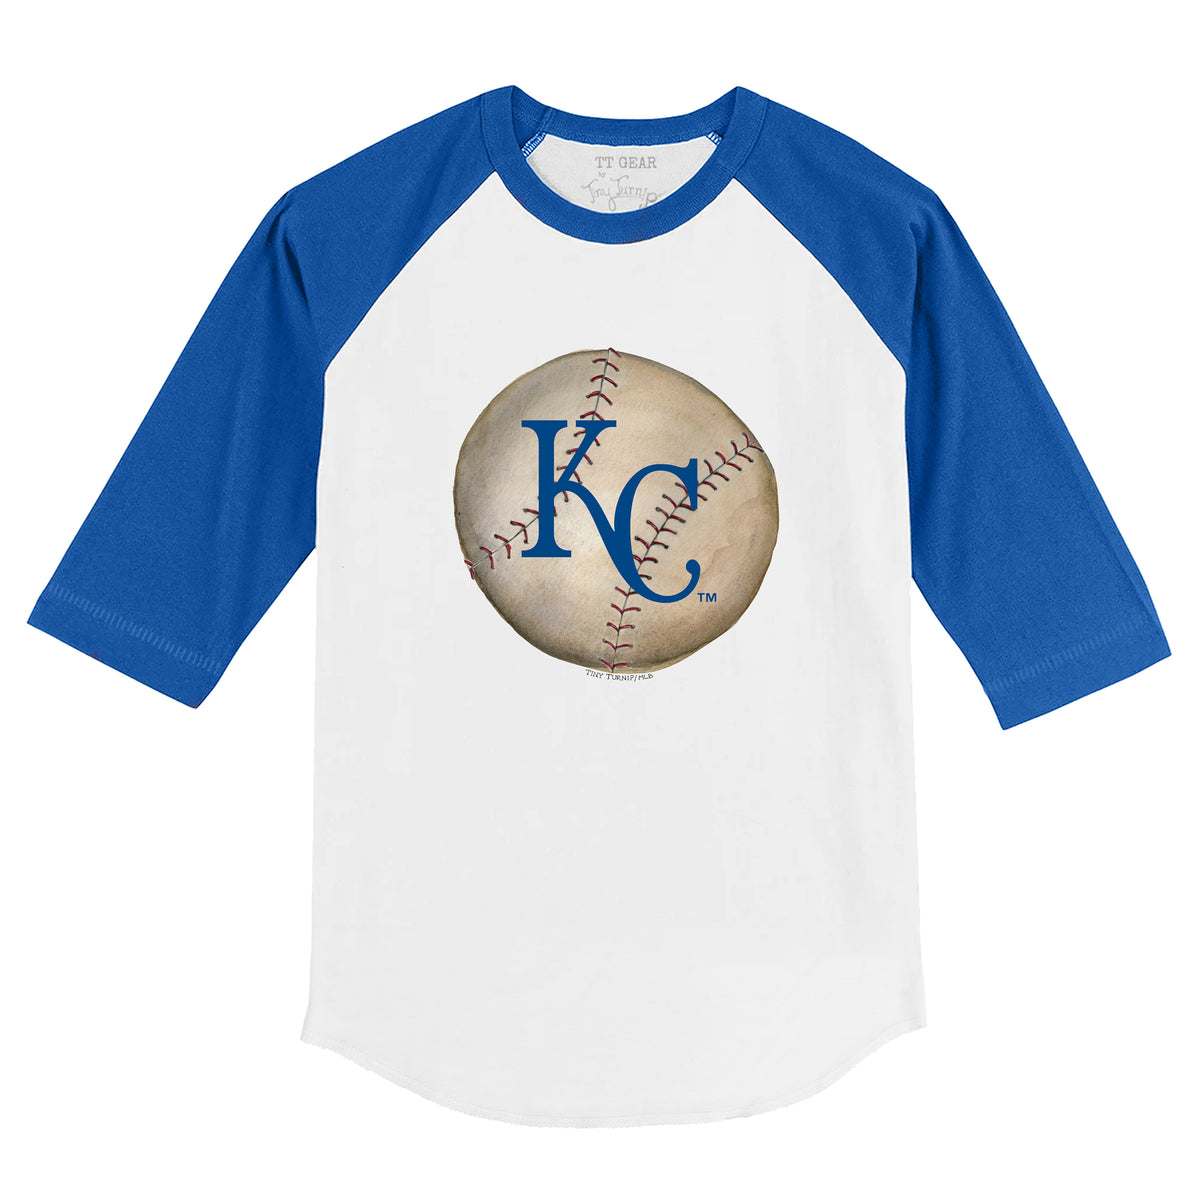 Kansas City Royals Stitched Baseball 3/4 Royal Blue Sleeve Raglan